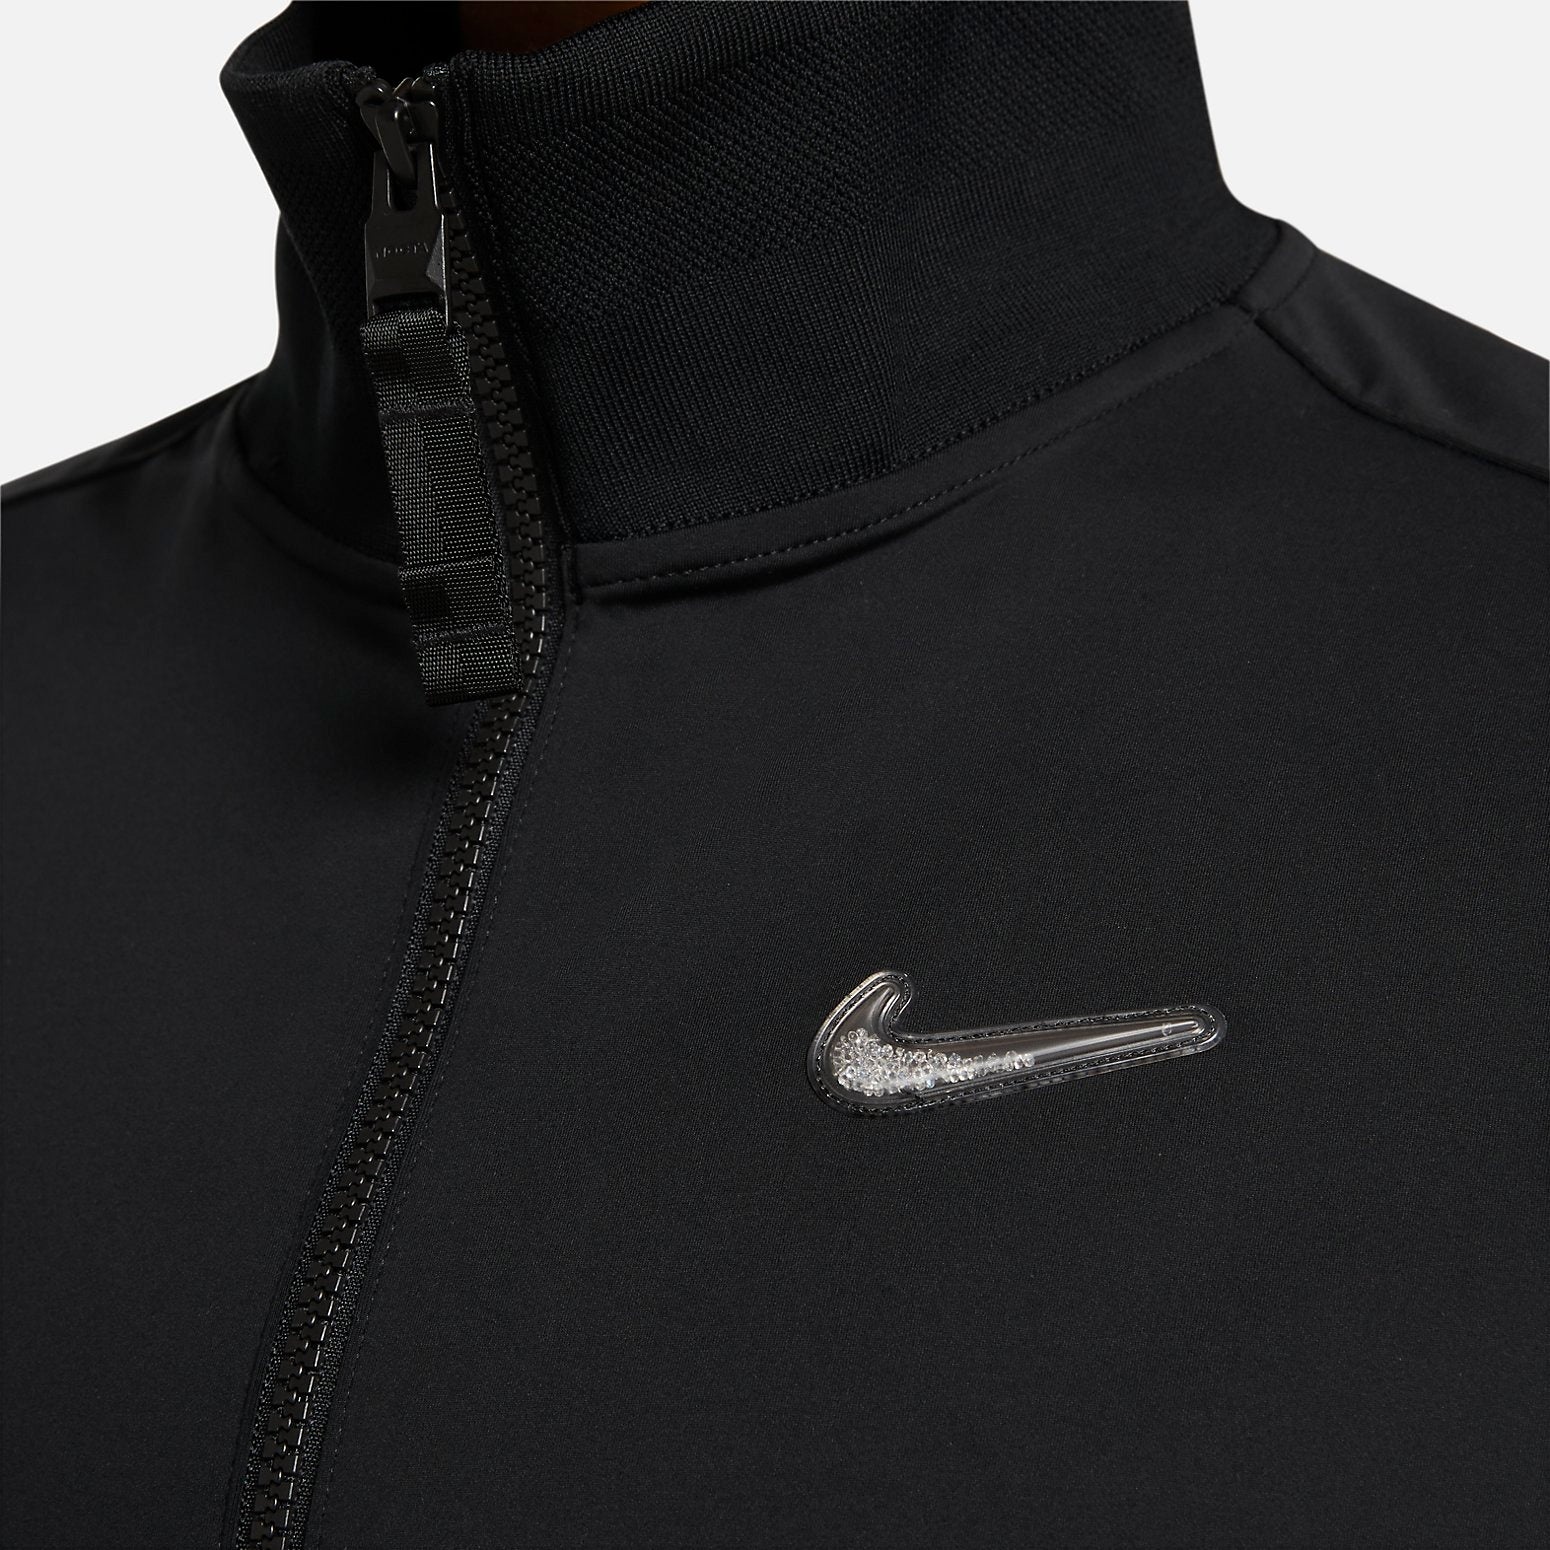 Nike x NOCTA NRG Full Zip Knit Top 'Black' DR2656-010 - 2